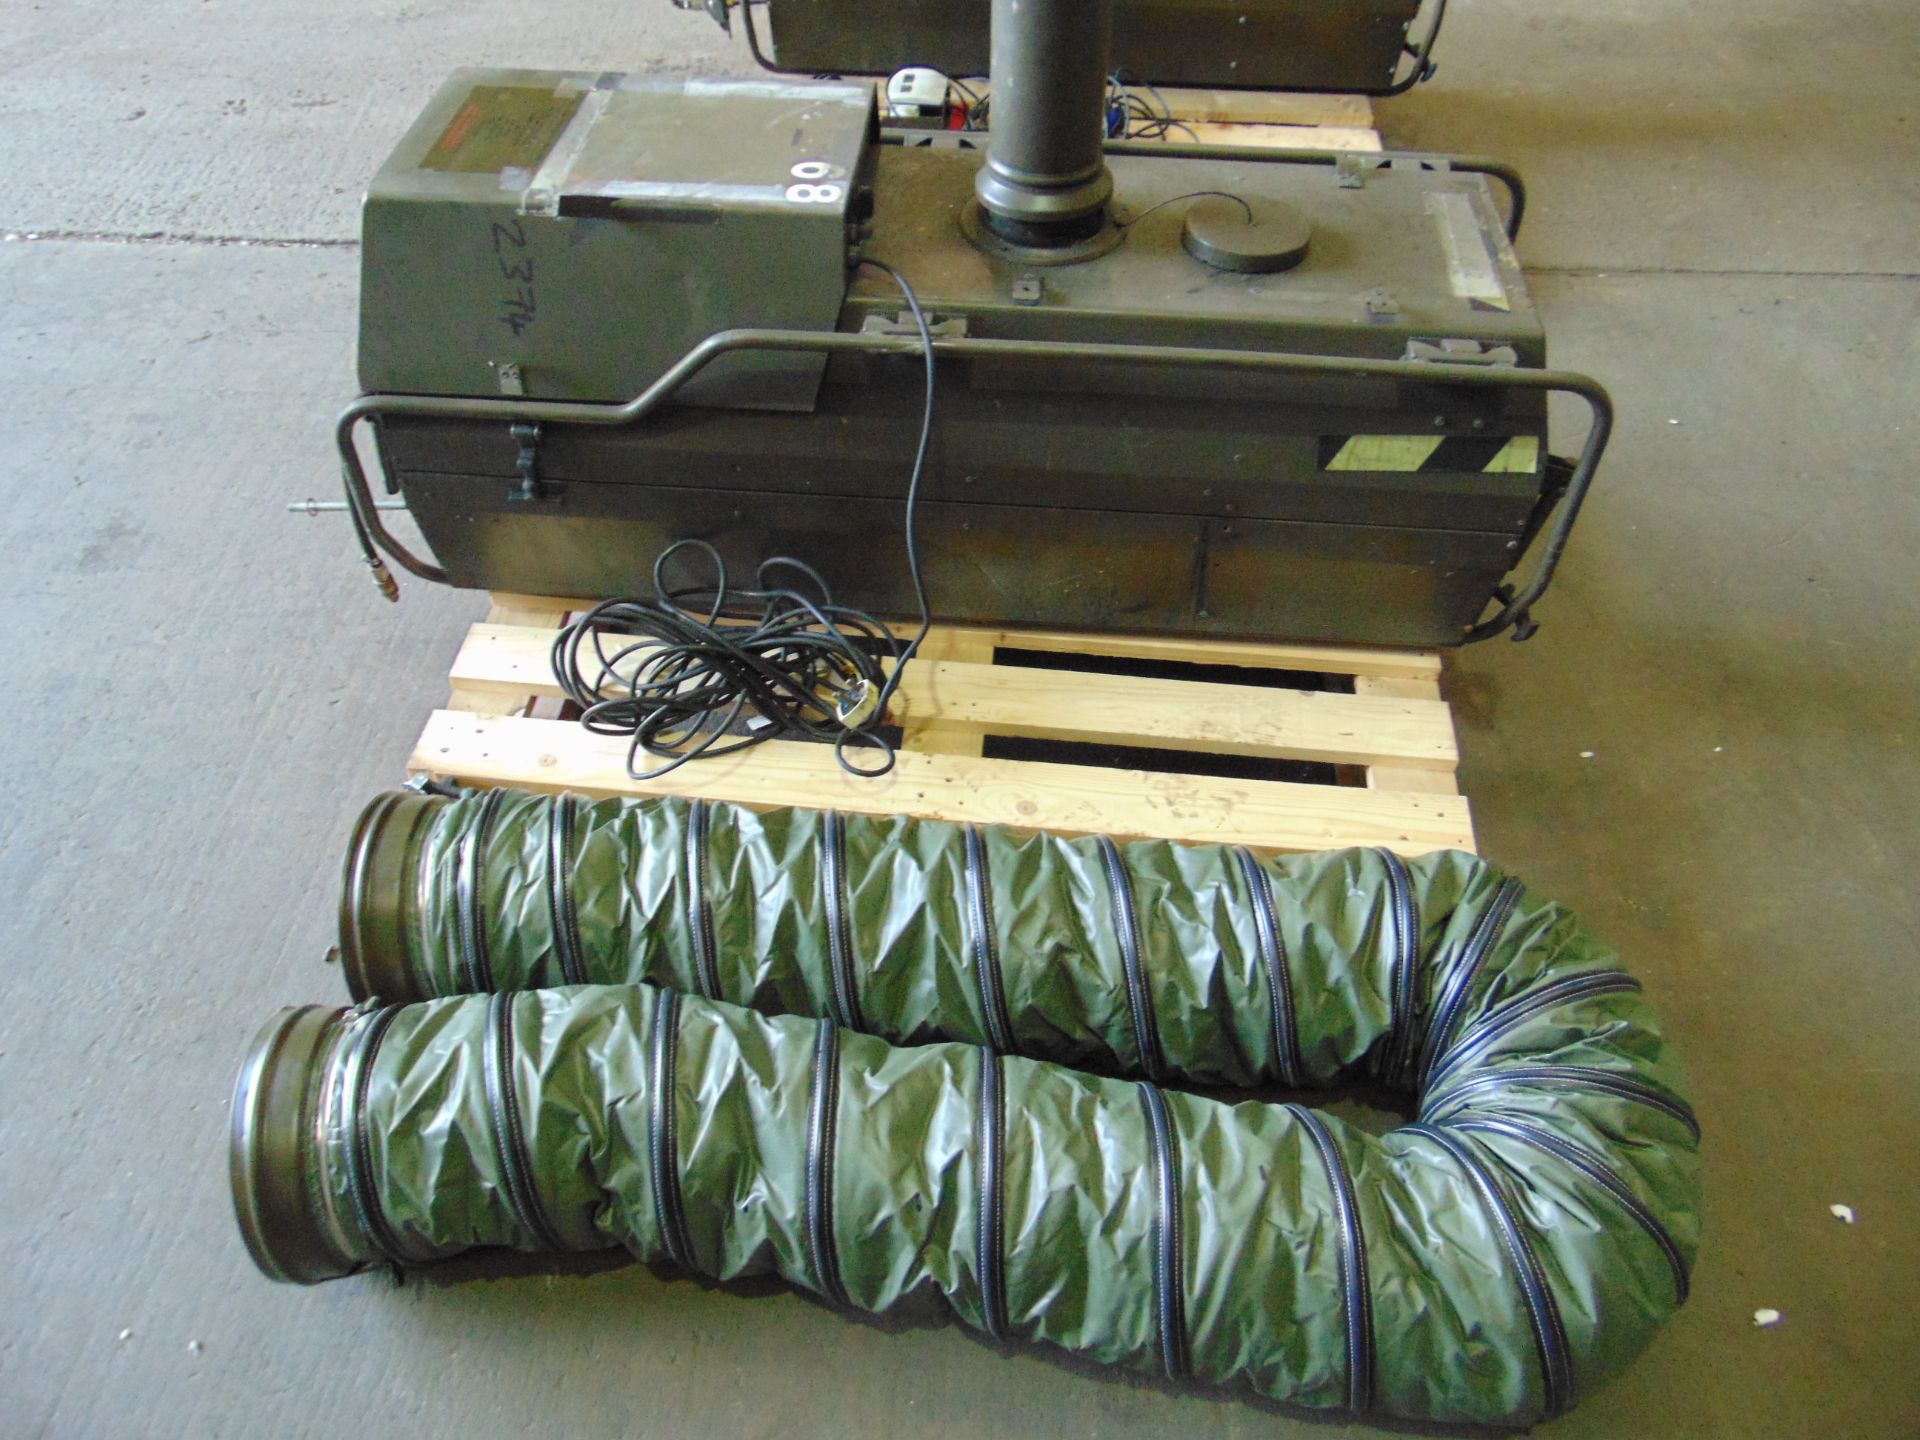 Dantherm VAM 15 portable workshop/building heater 240 volt c/w accessories as shown - Image 5 of 14